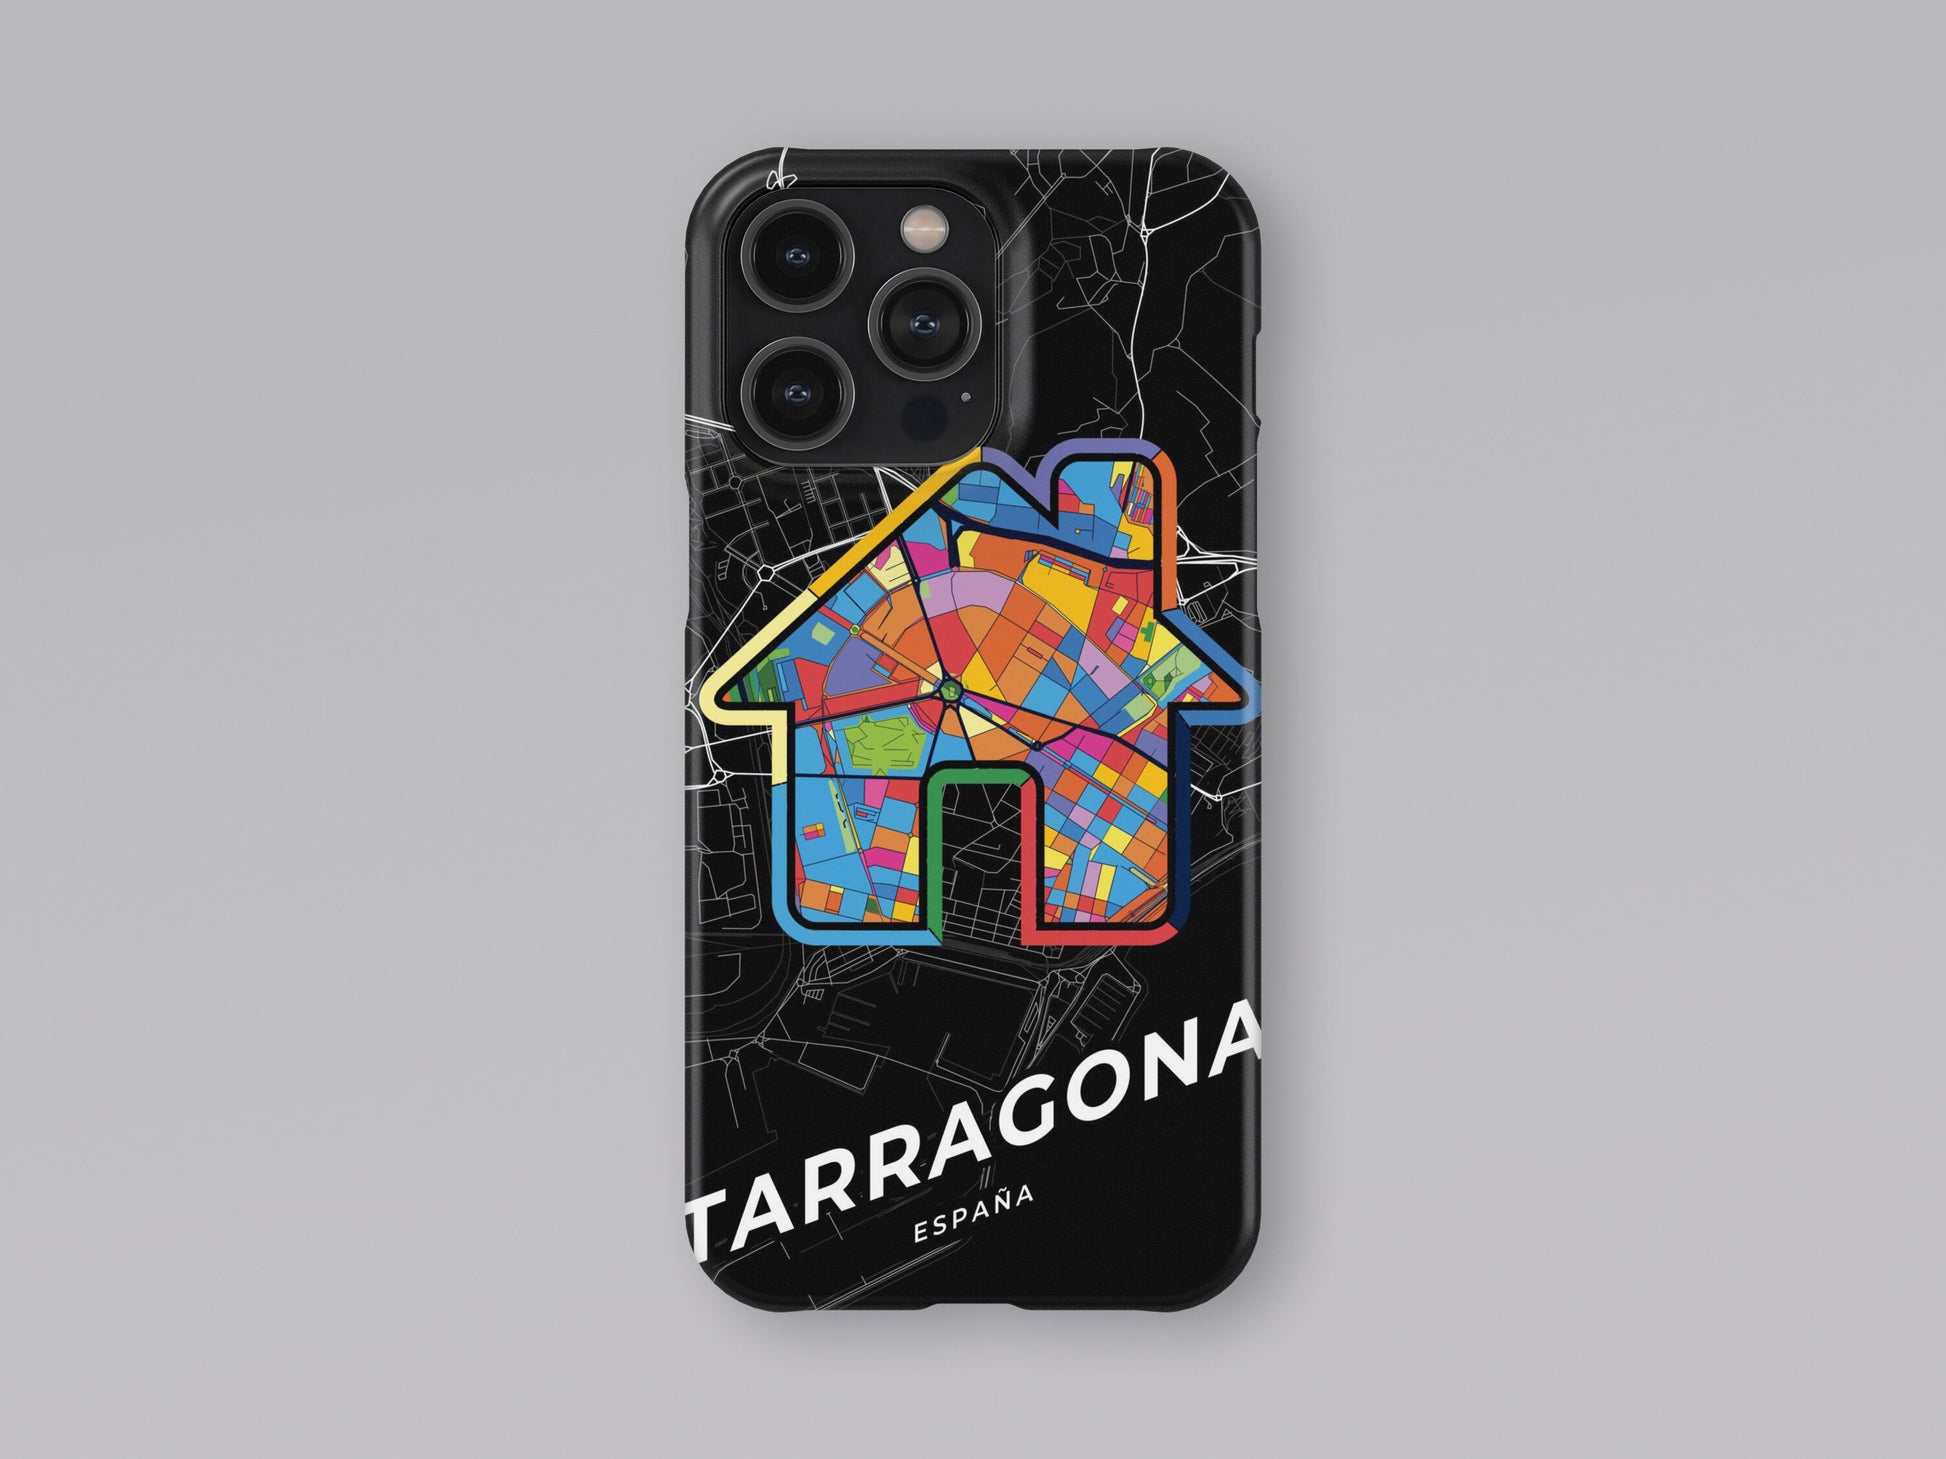 Tarragona Spain slim phone case with colorful icon 3